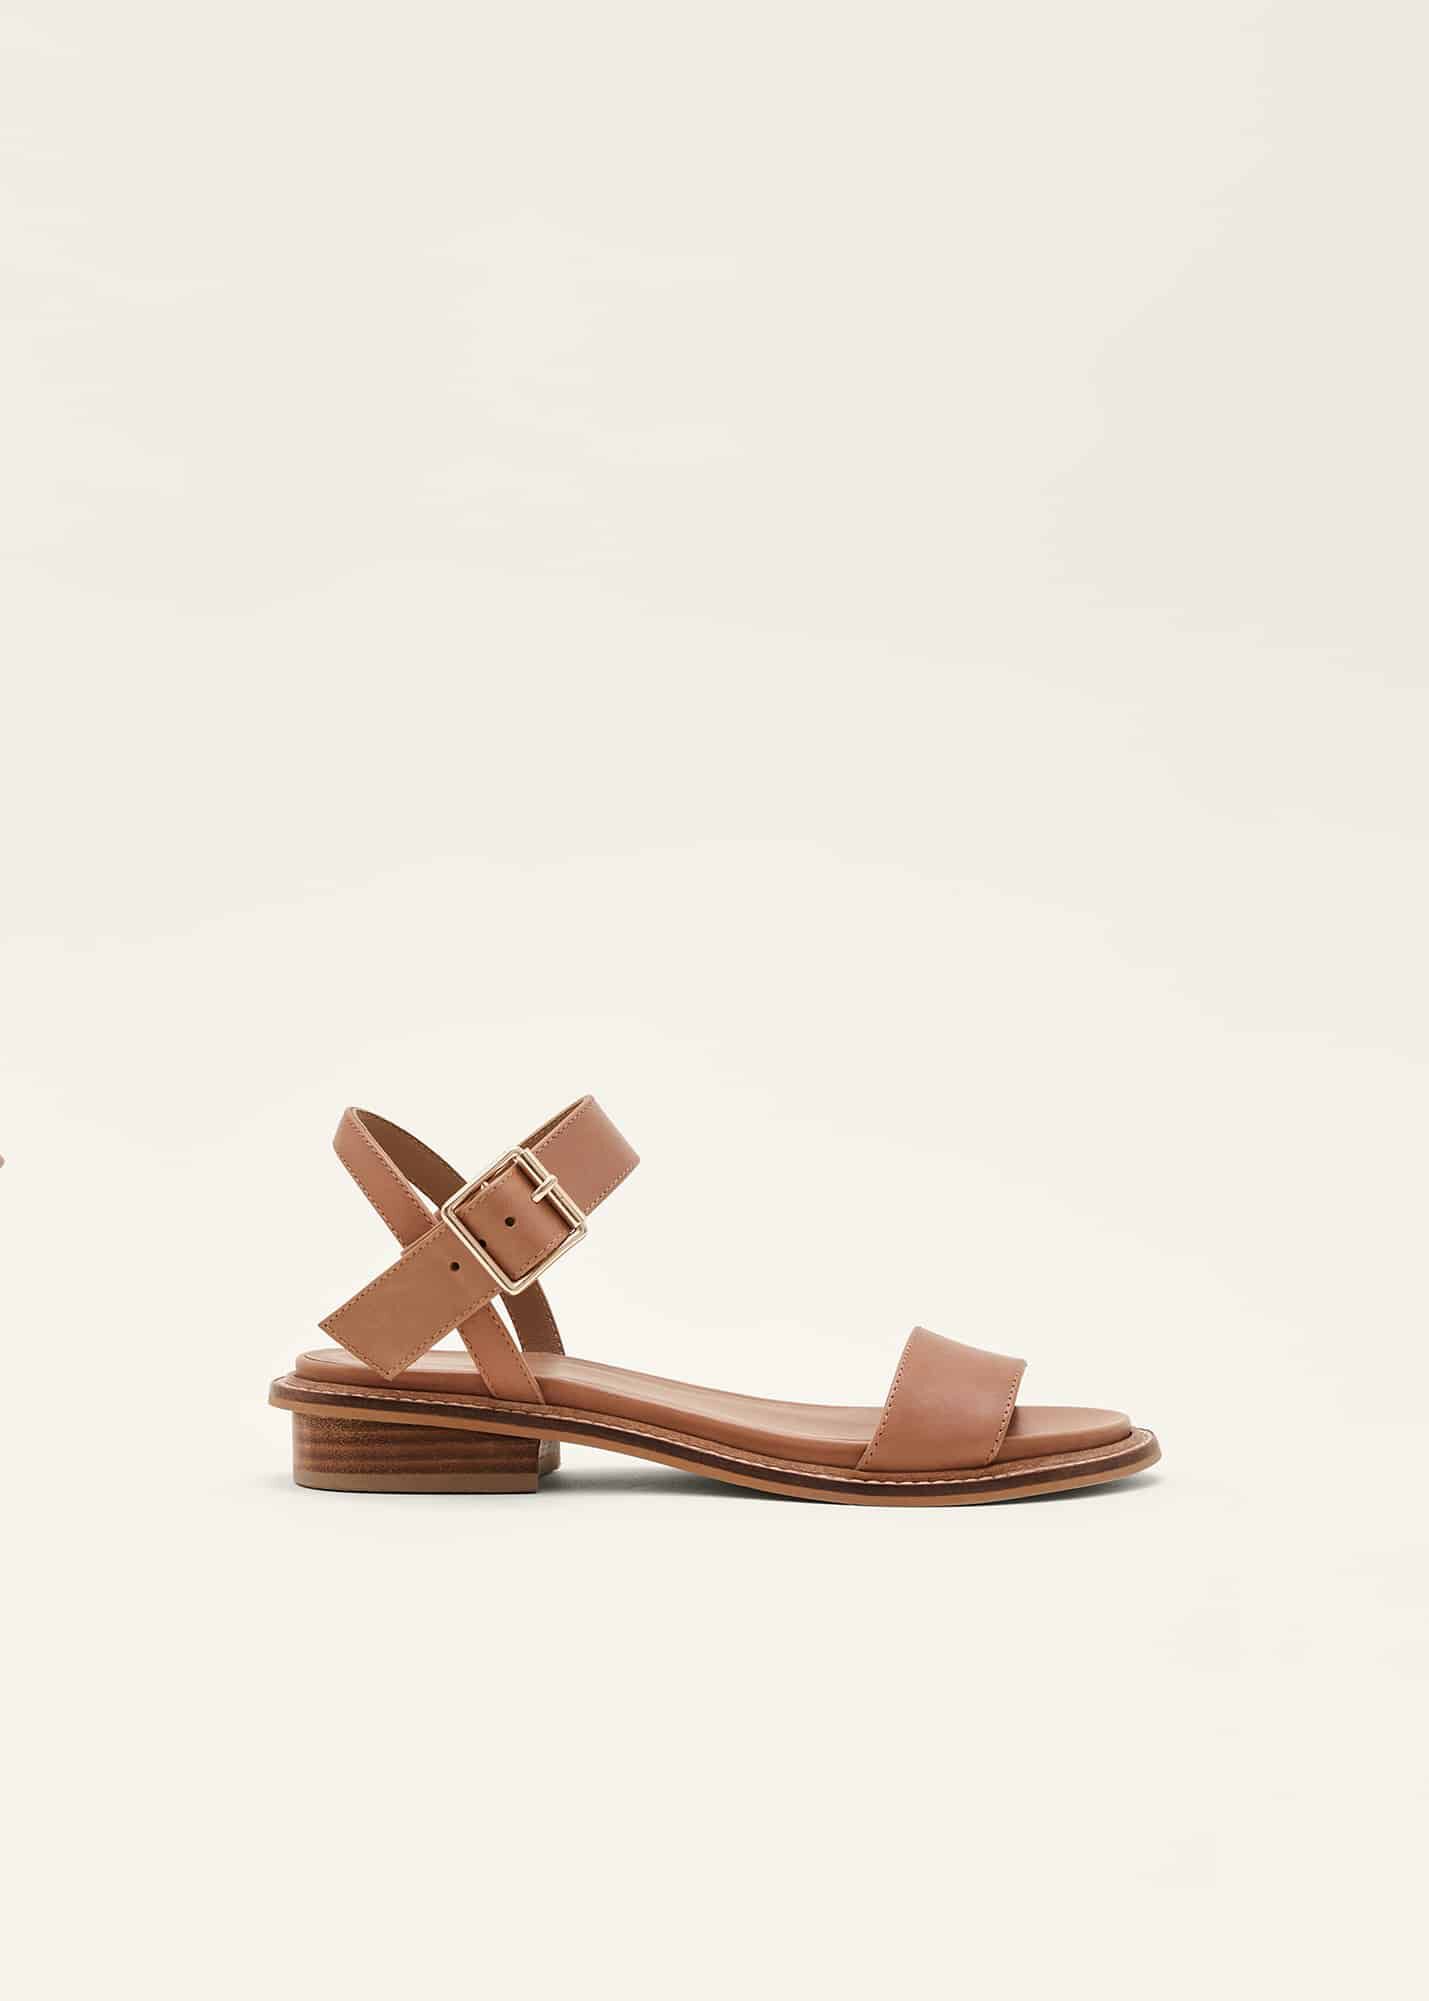 Matisse Runaway Platform Sandals in Tan | Groovy's | Leather Platform